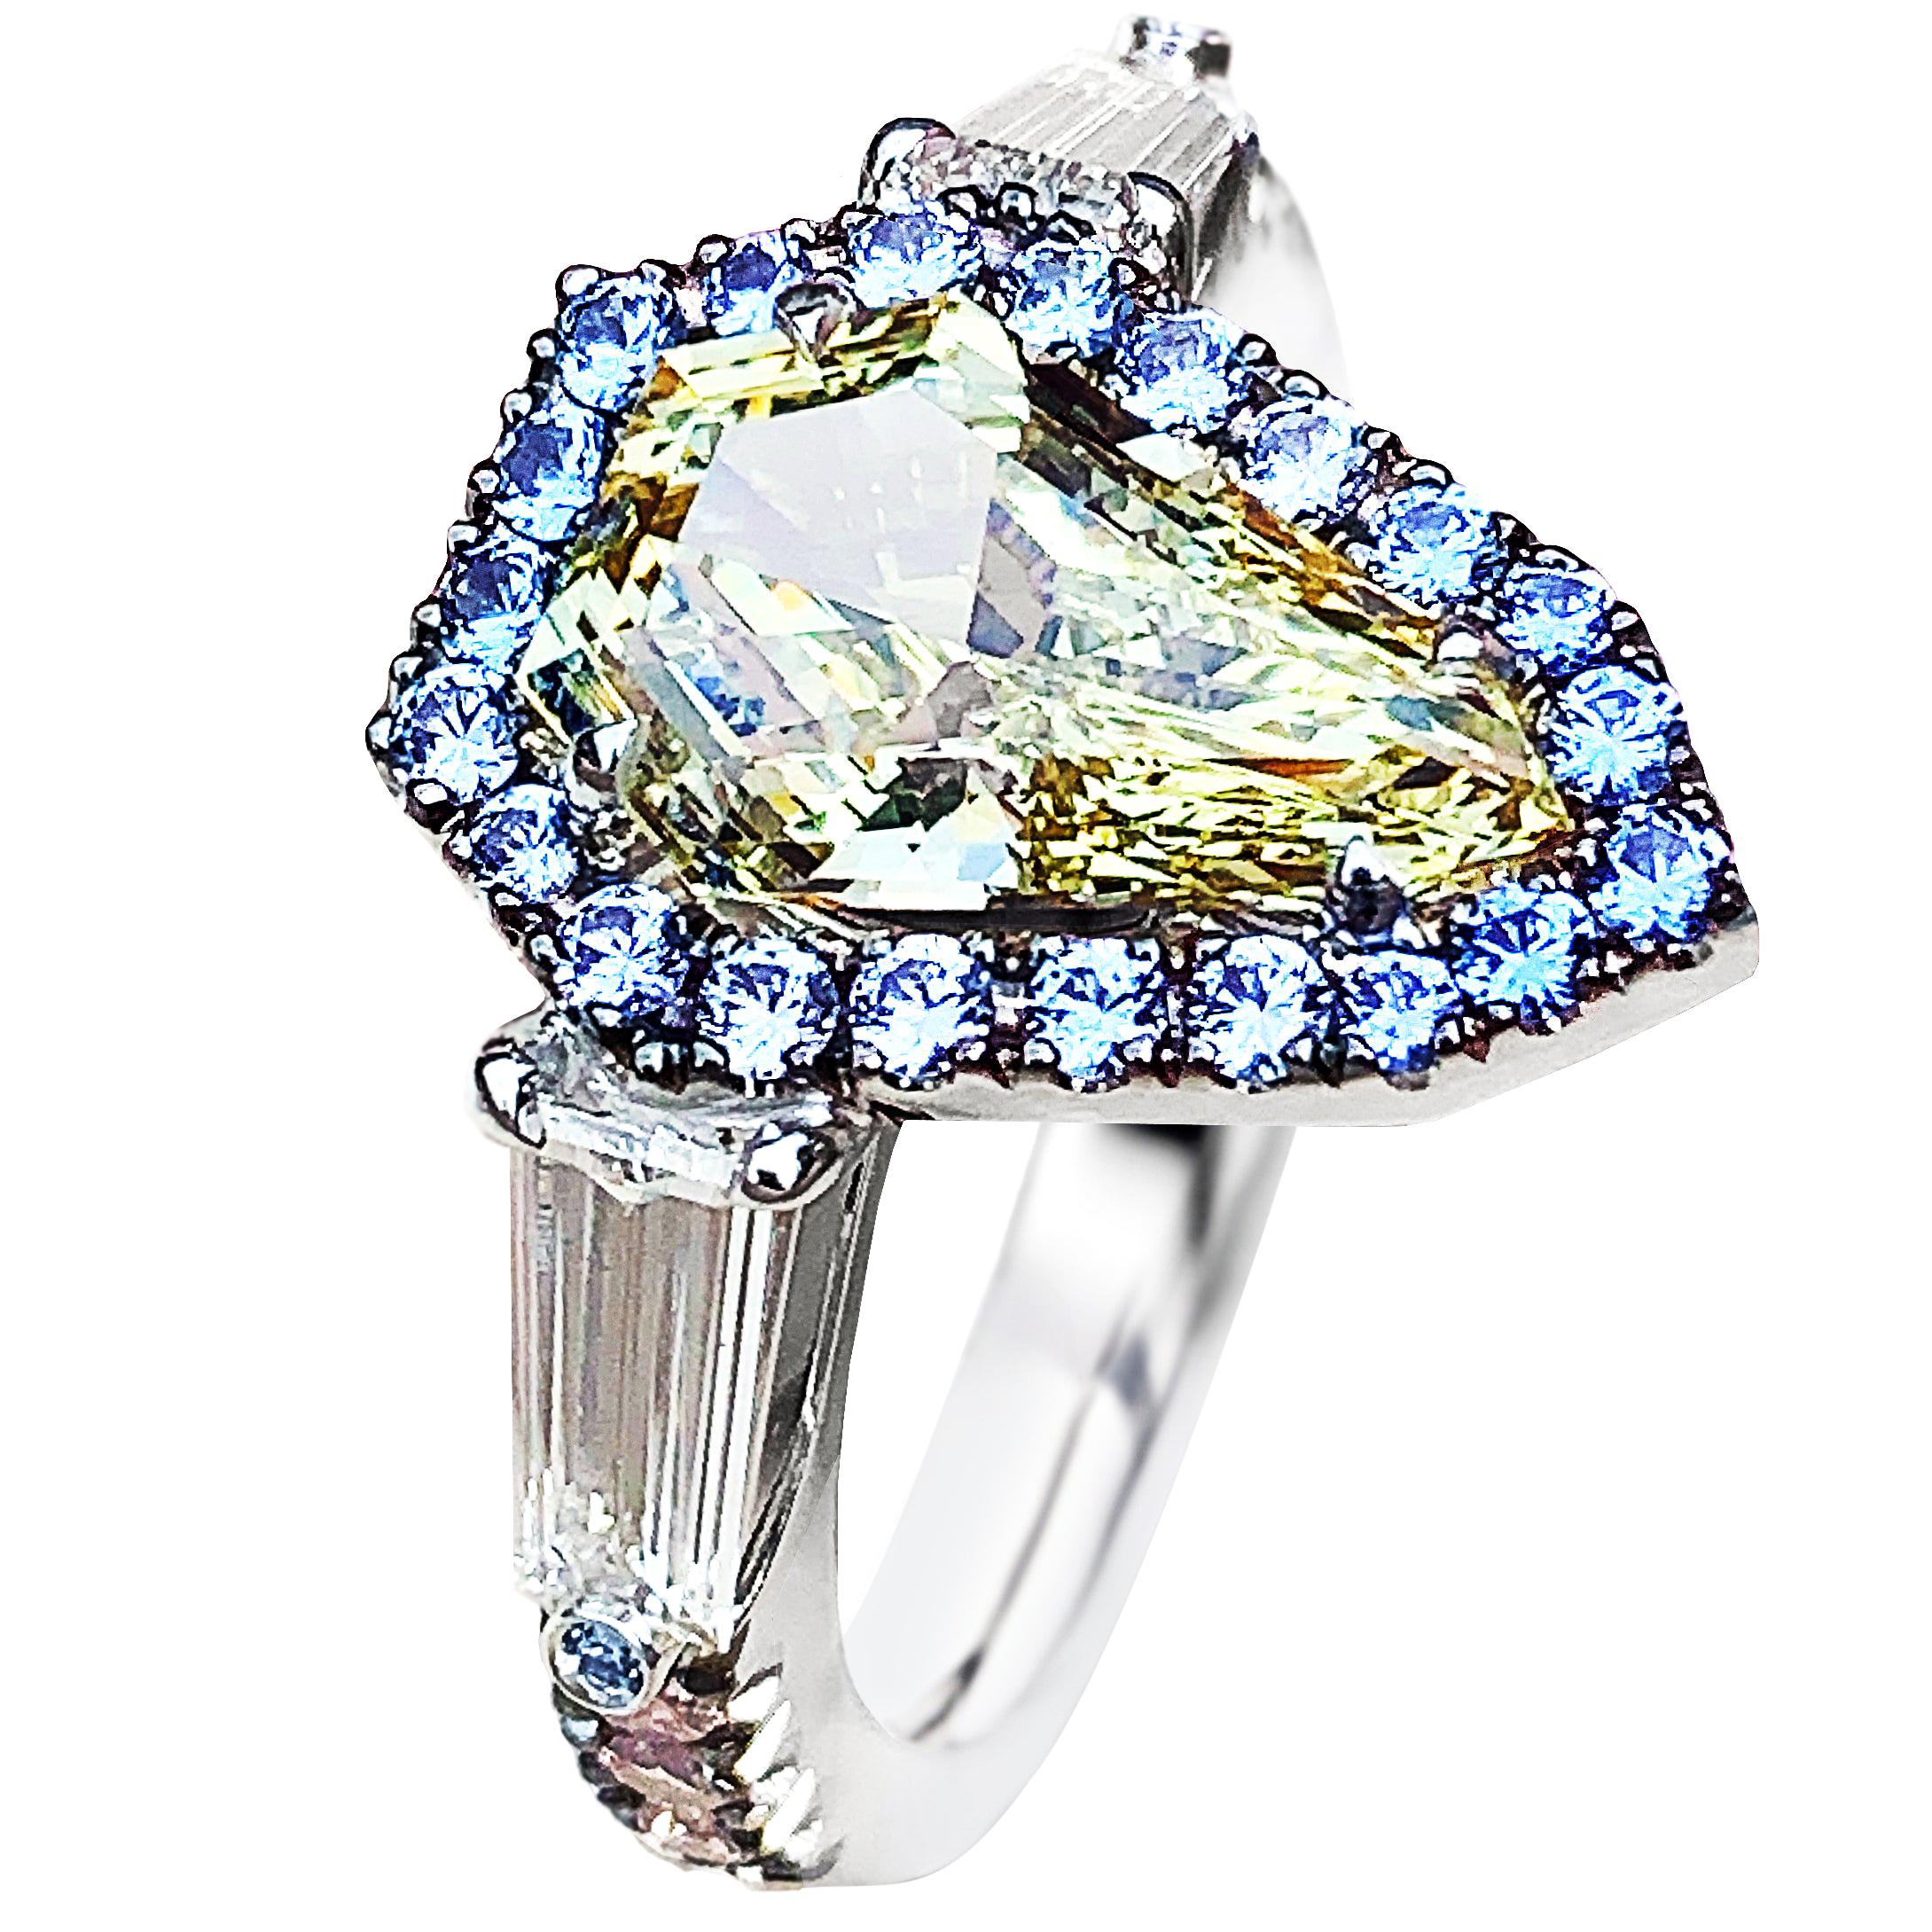 1.43 Ct. VVS2 GIA Fancy Yellow Shield Cut Diamond, Unheated Blue Sapphire Ring